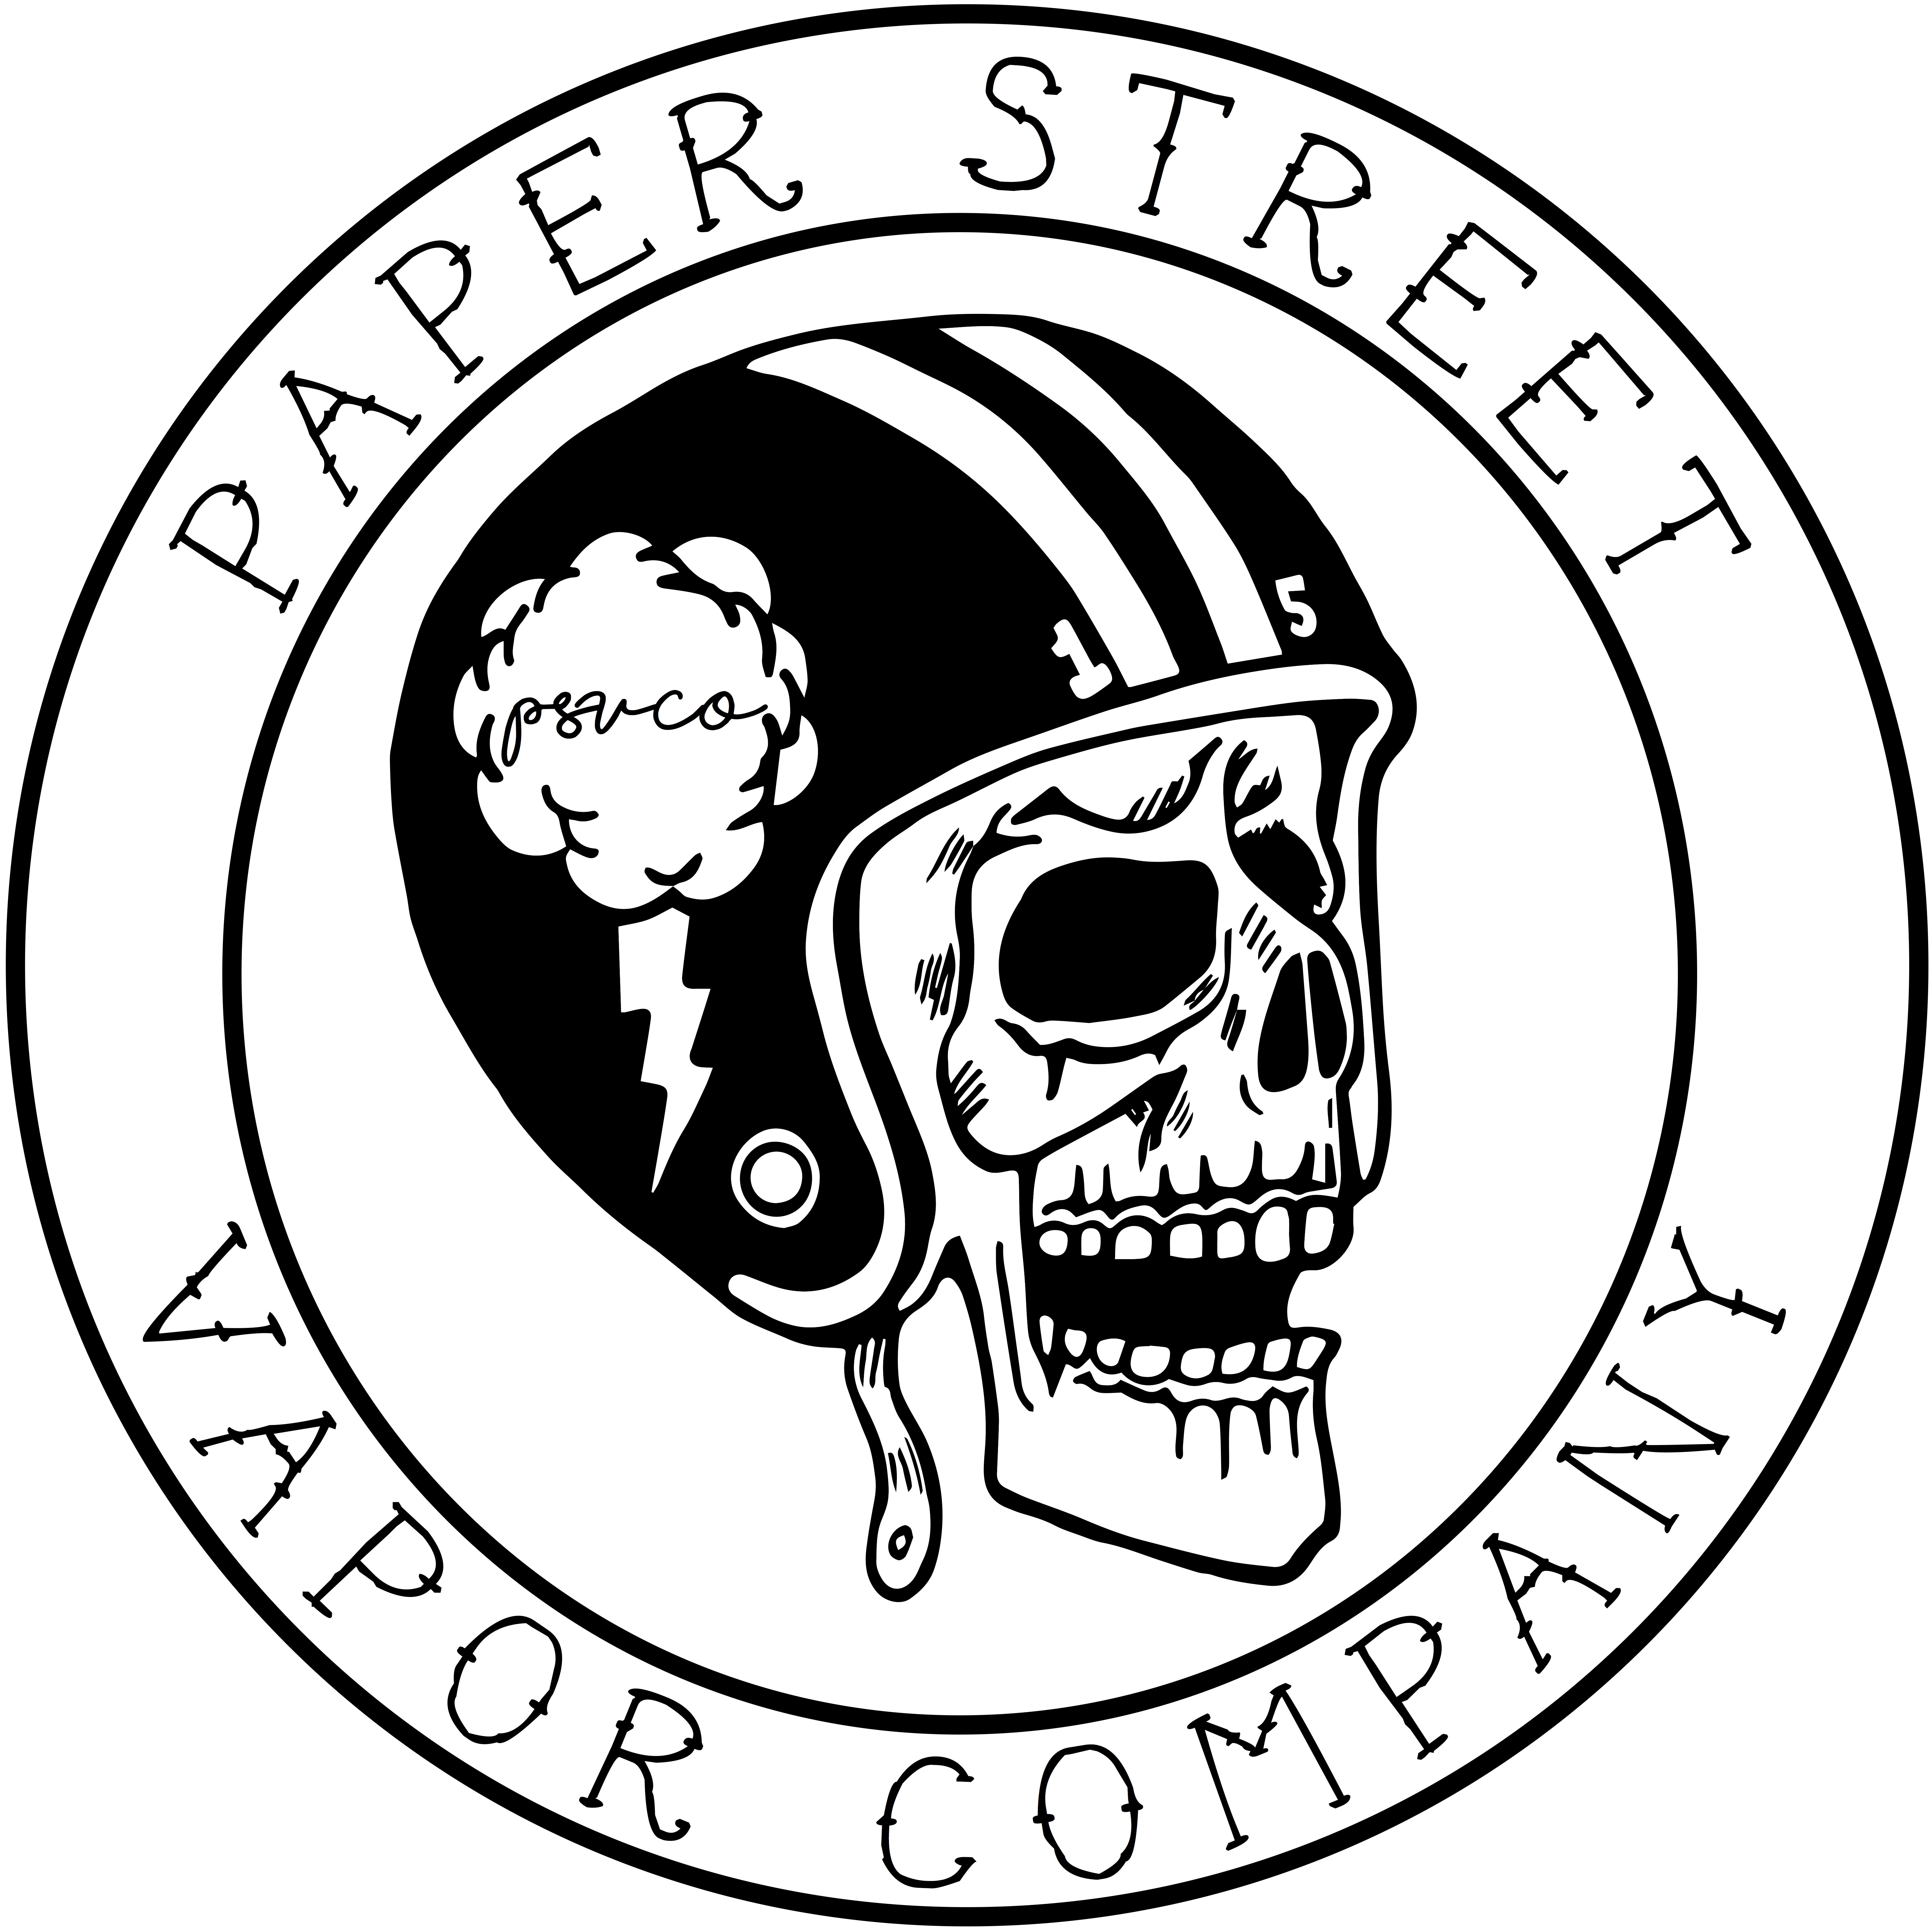 Paper Street Vapor Co